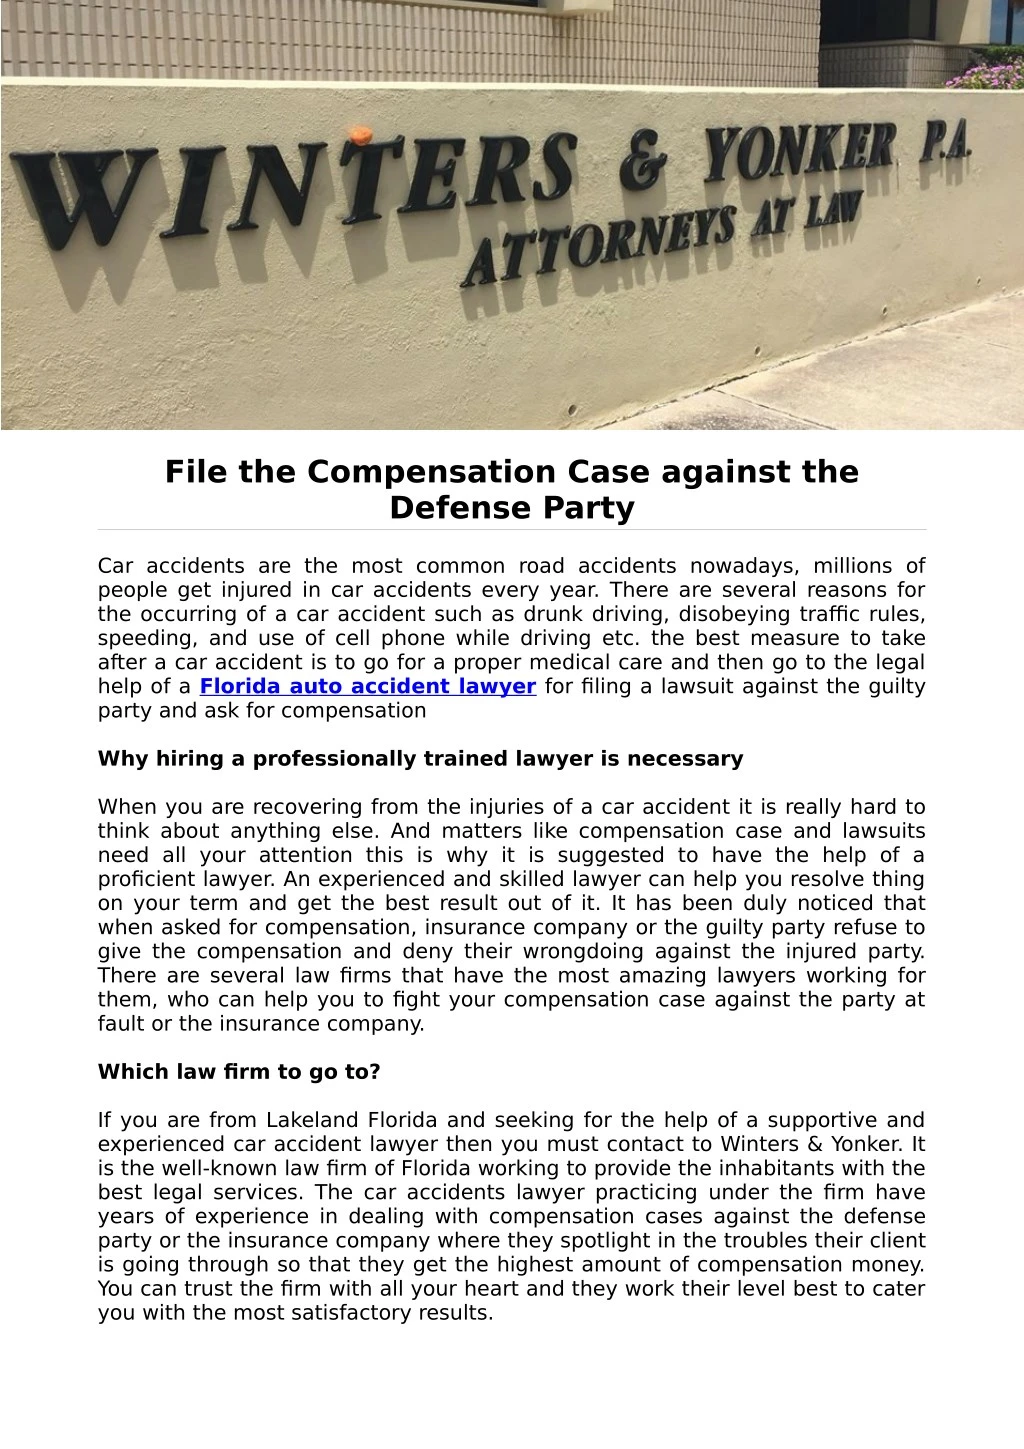 file the compensation case against the defense